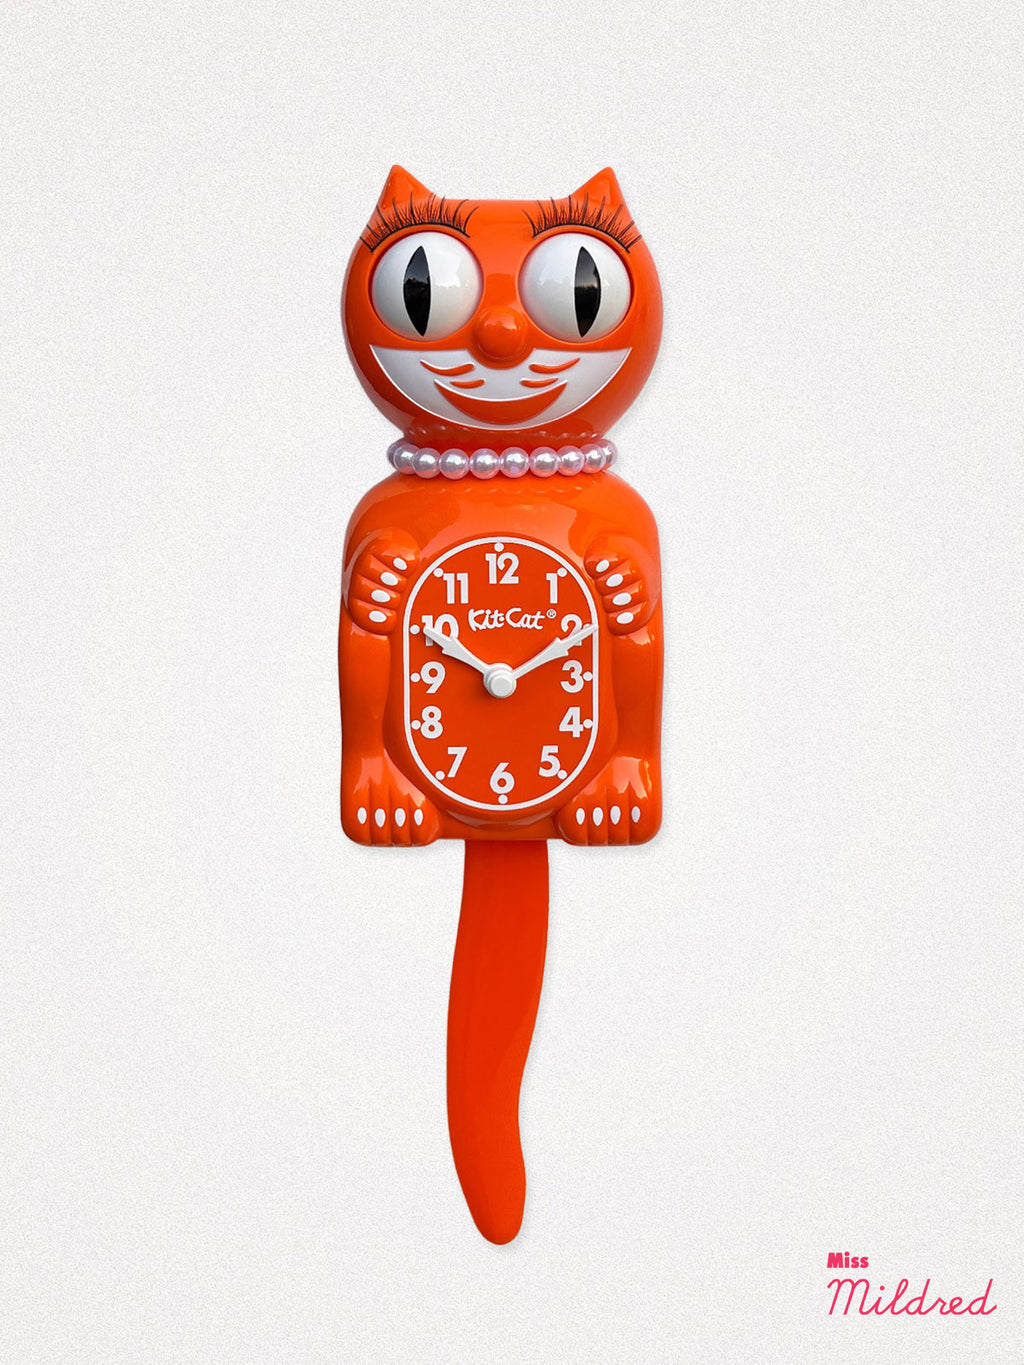 Kit Cat Clock - Original Large Size - Orange Necklace